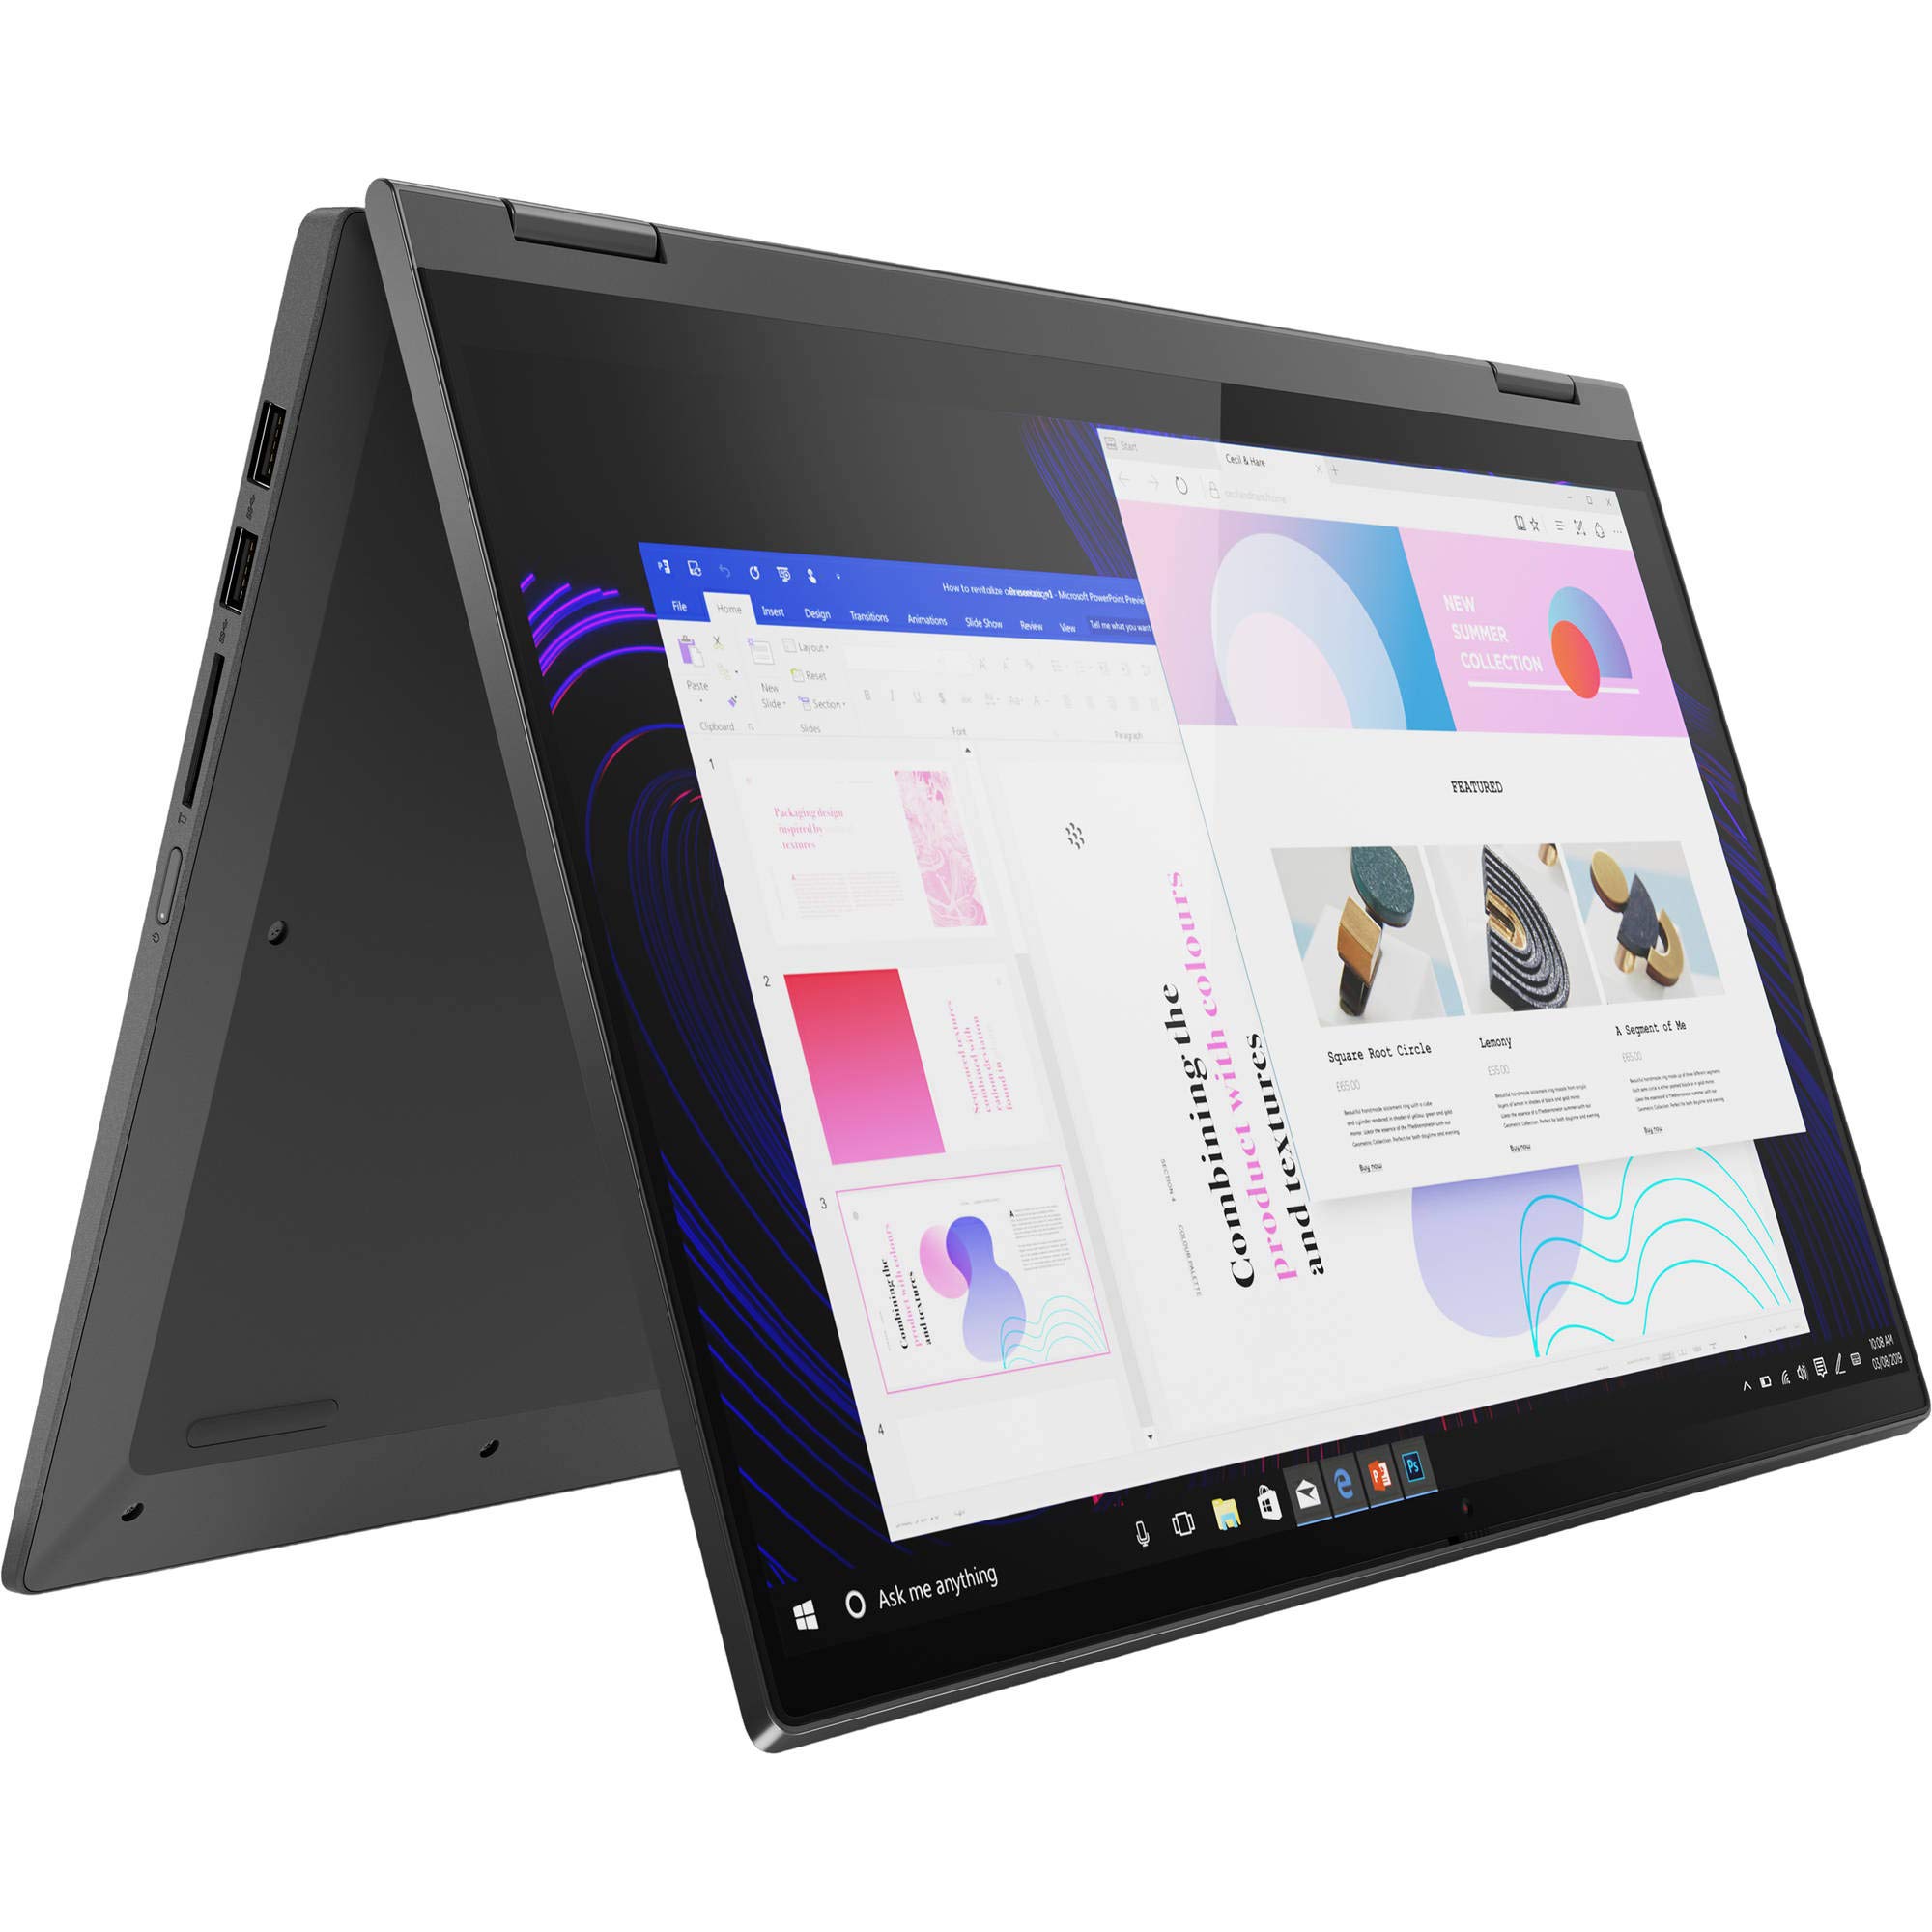 Lenovo IdeaPad Flex 5 15IIL05 81X3000VUS (Intel i7-1065G7 4-Core, 16GB RAM, 512GB SSD, Intel Iris Plus, 15.6" Touch Full HD (1920x1080), Fingerprint, Win 10 Home) Graphite Grey Convertible Laptop